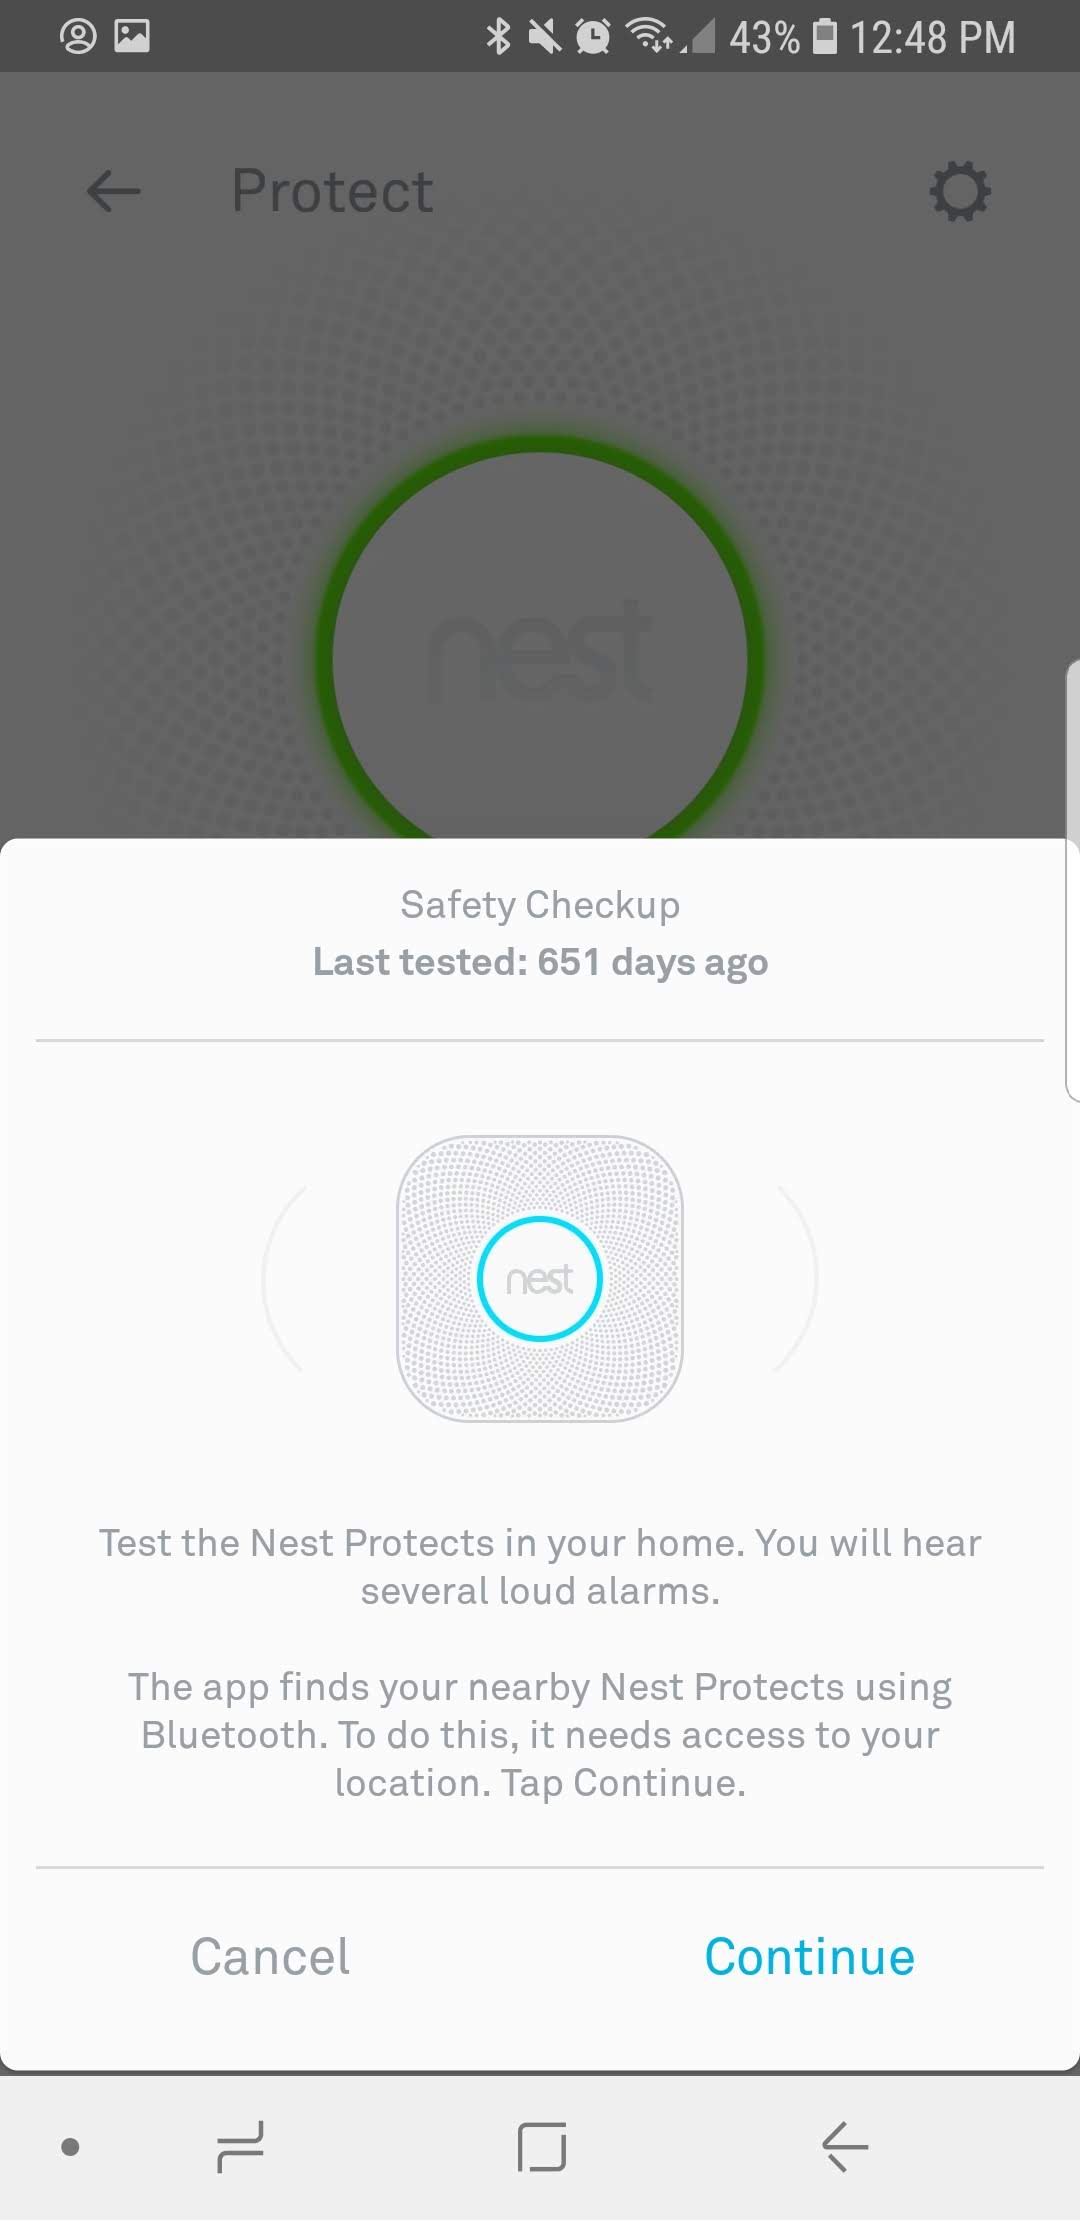 nest secure sensor battery life